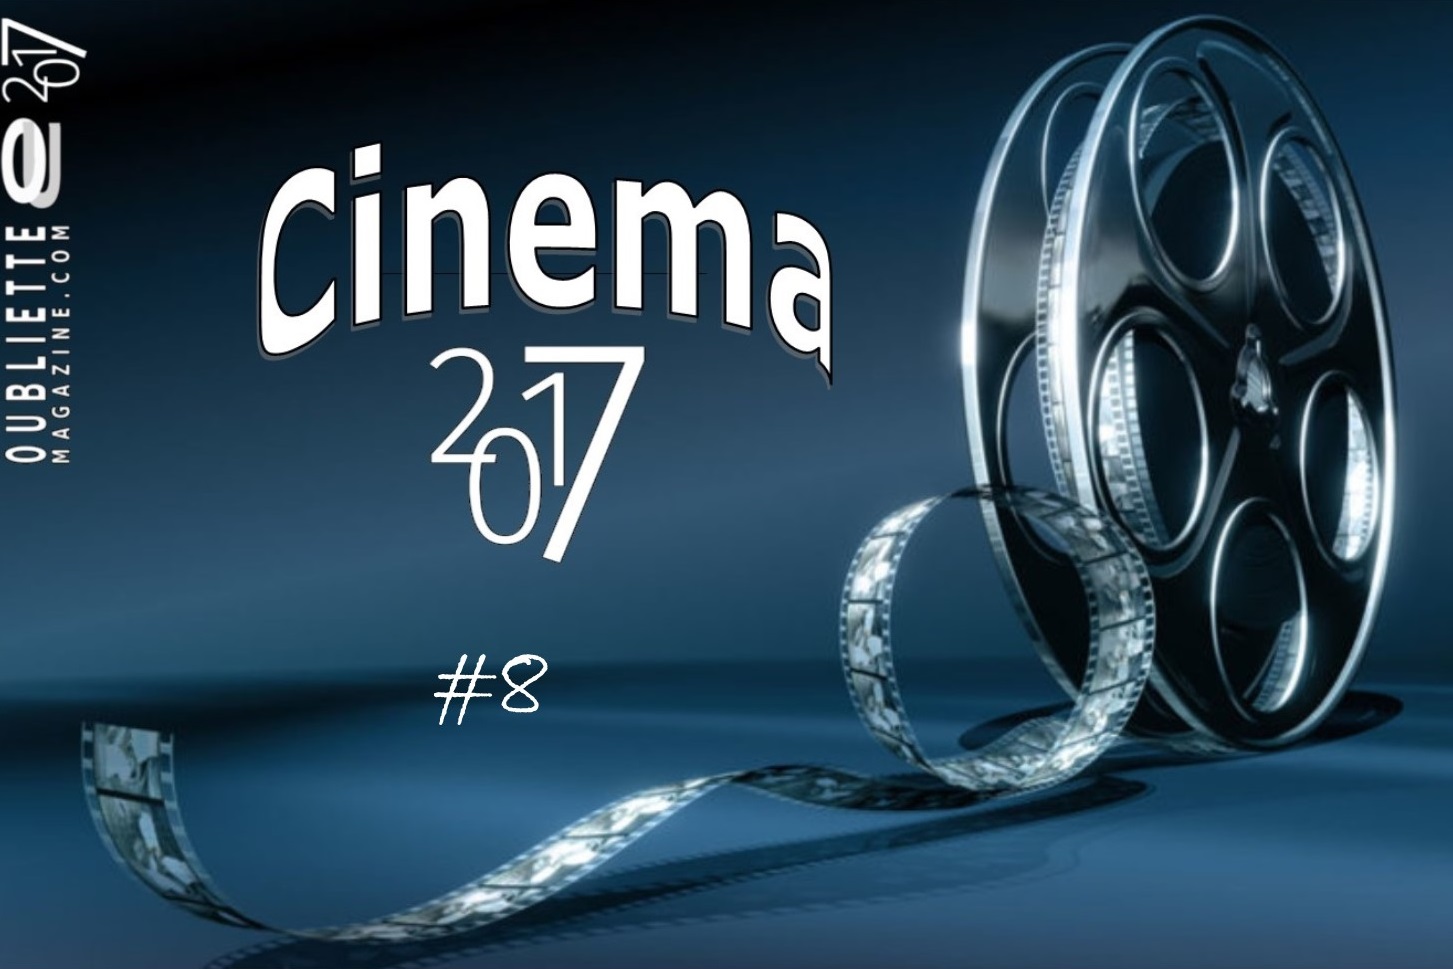 Cinema 2017: da Radu Mihaileanu a Luc Besson, ecco tutte le novità sui film in uscita nelle sale italiane #8